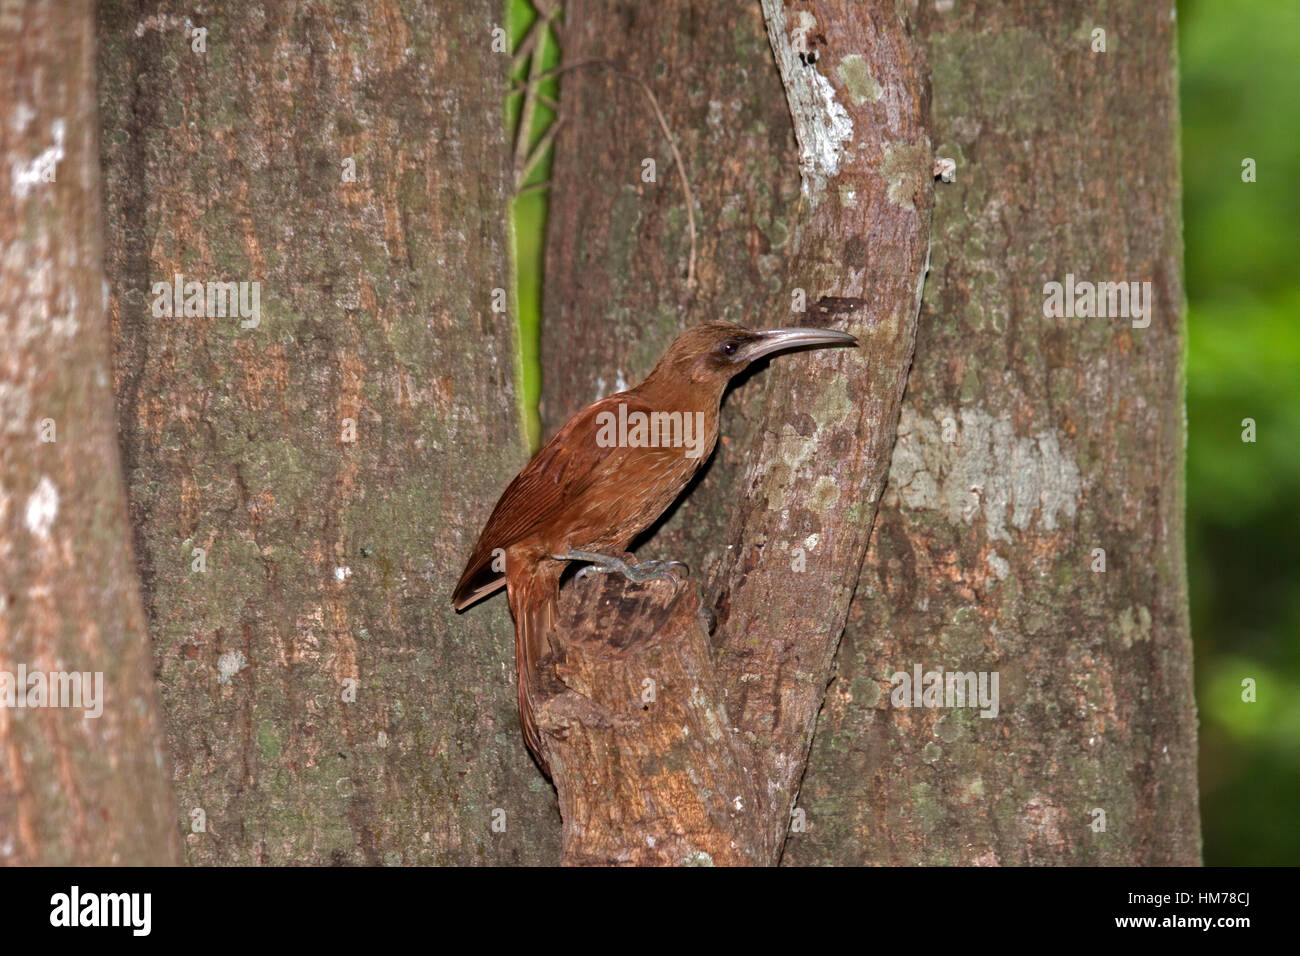 Grande rufous woodcreeper aggrappandosi ad albero in Brasile Foto Stock